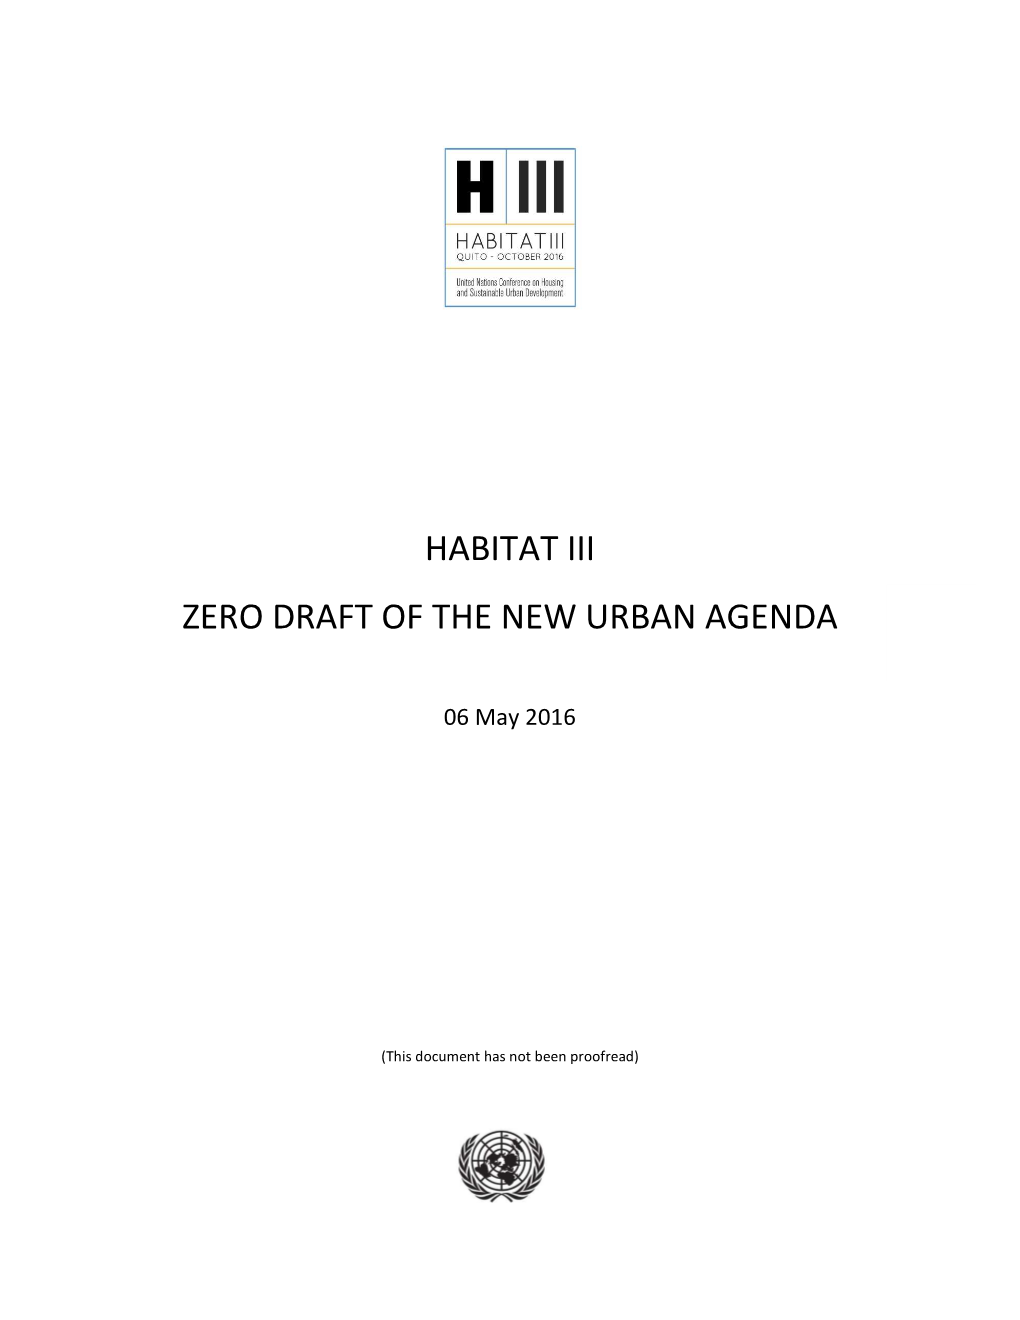 Habitat Iii Zero Draft of the New Urban Agenda